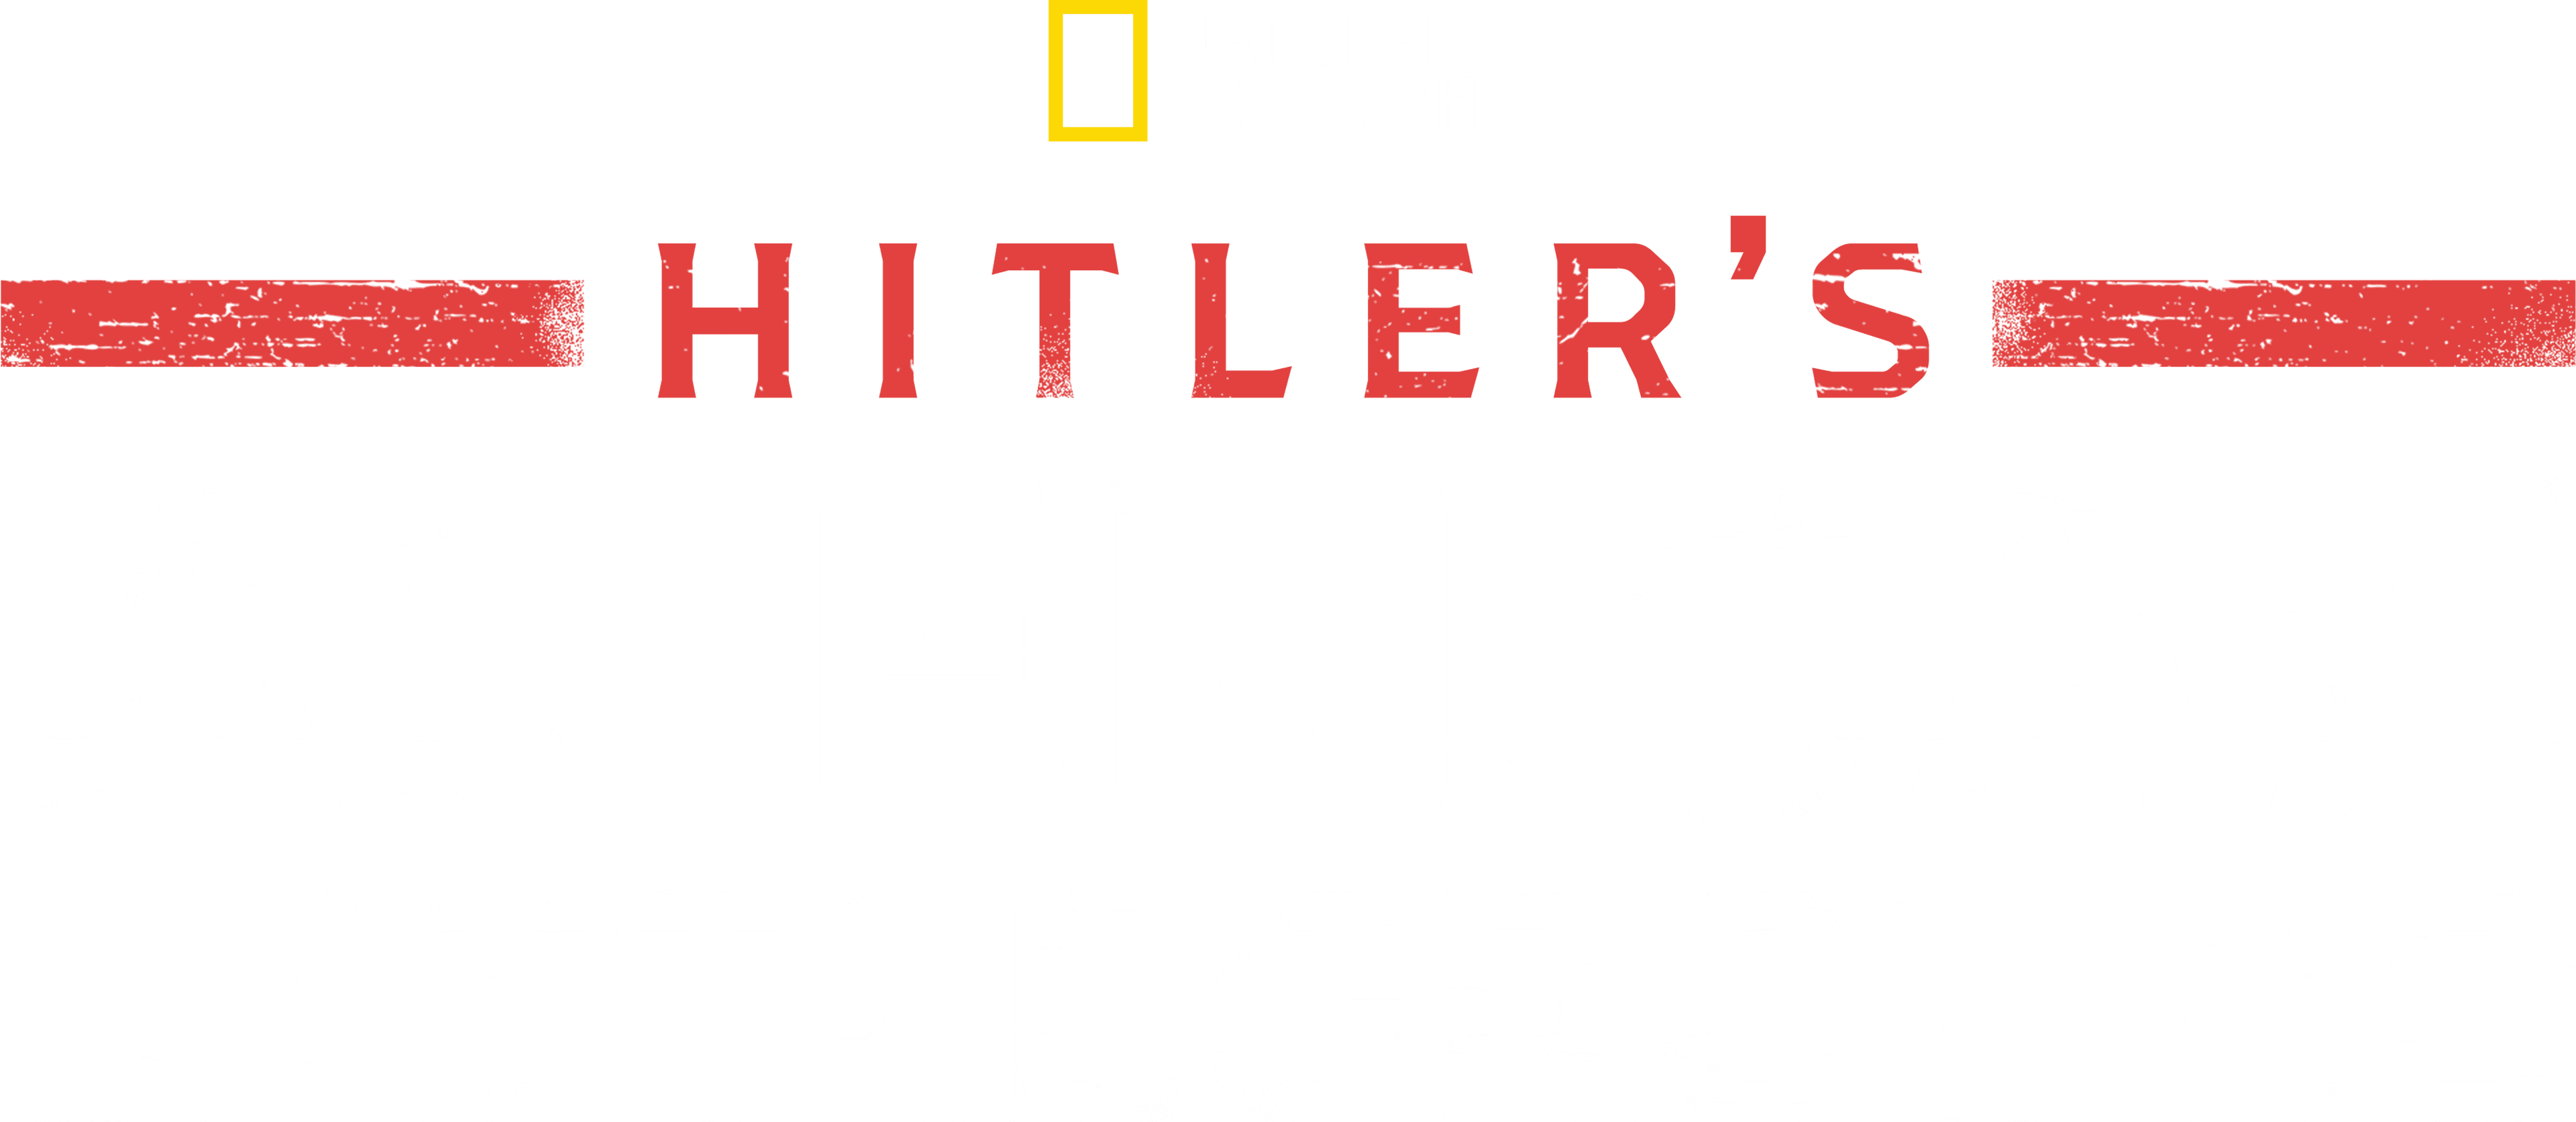 Hitler's American Battleground logo